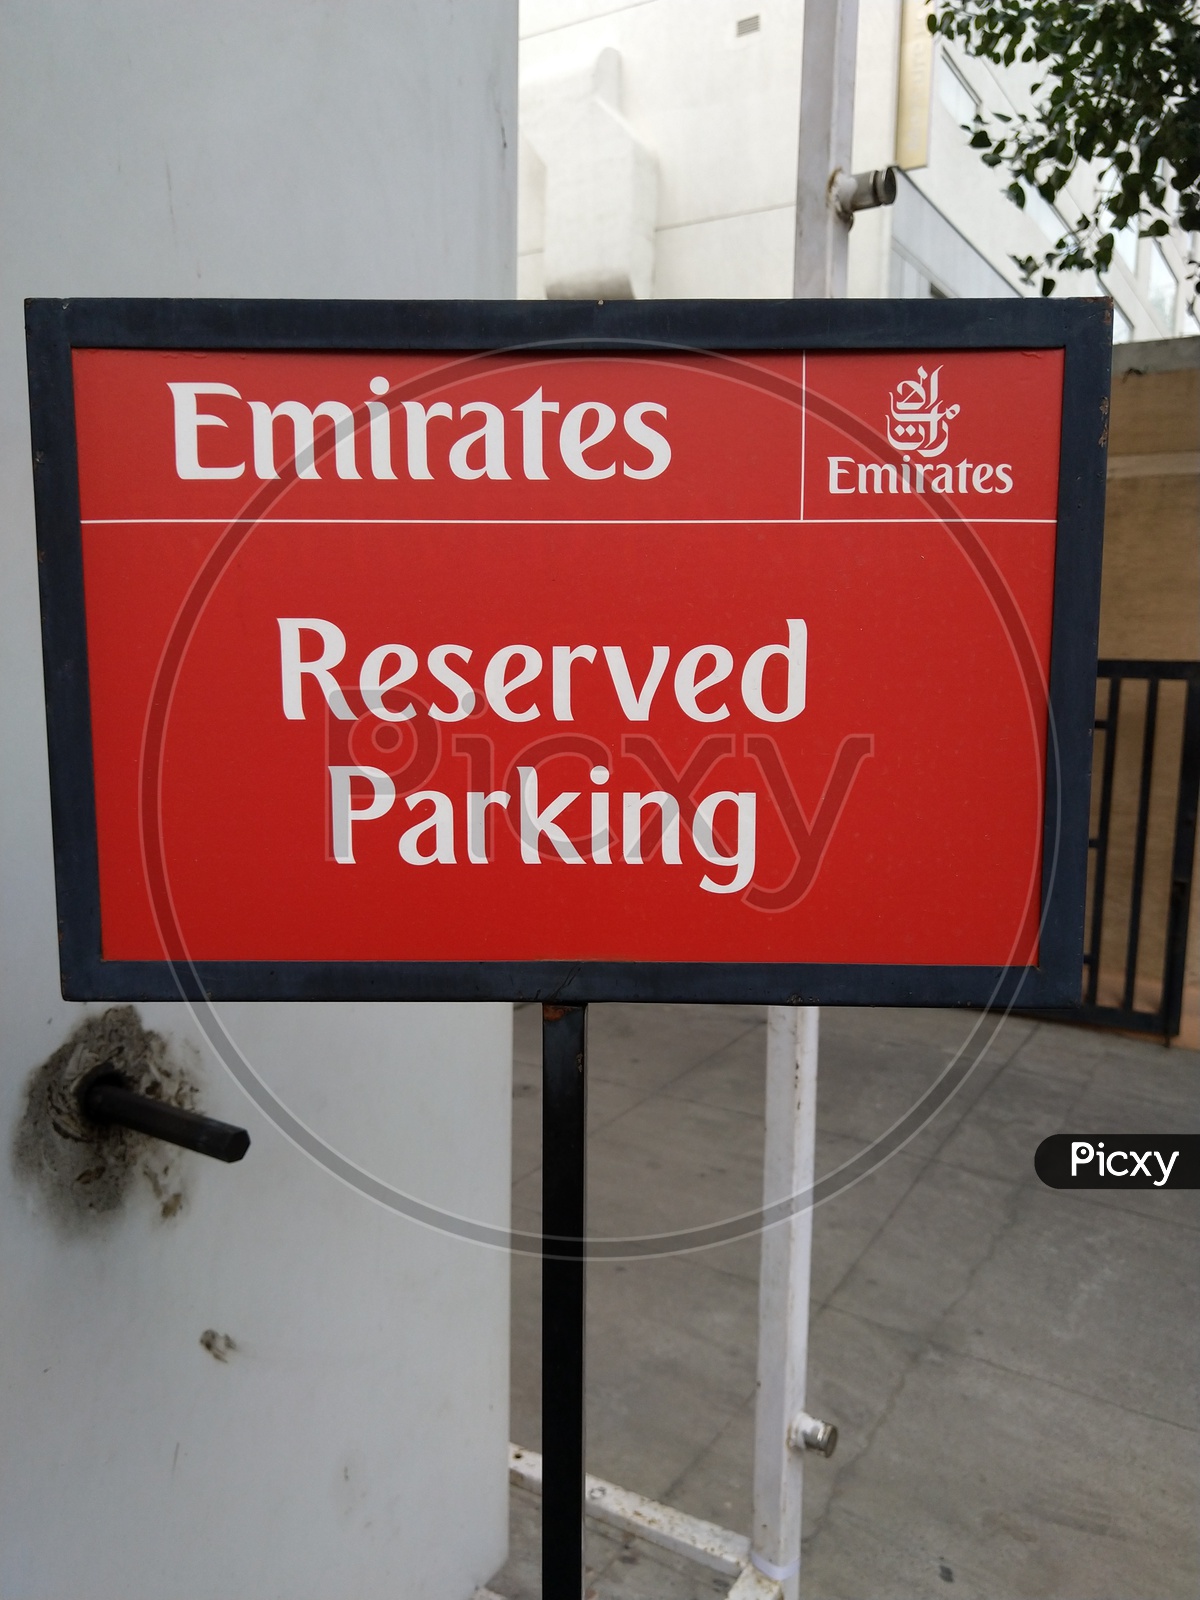 Emirates Branding on Parking Board